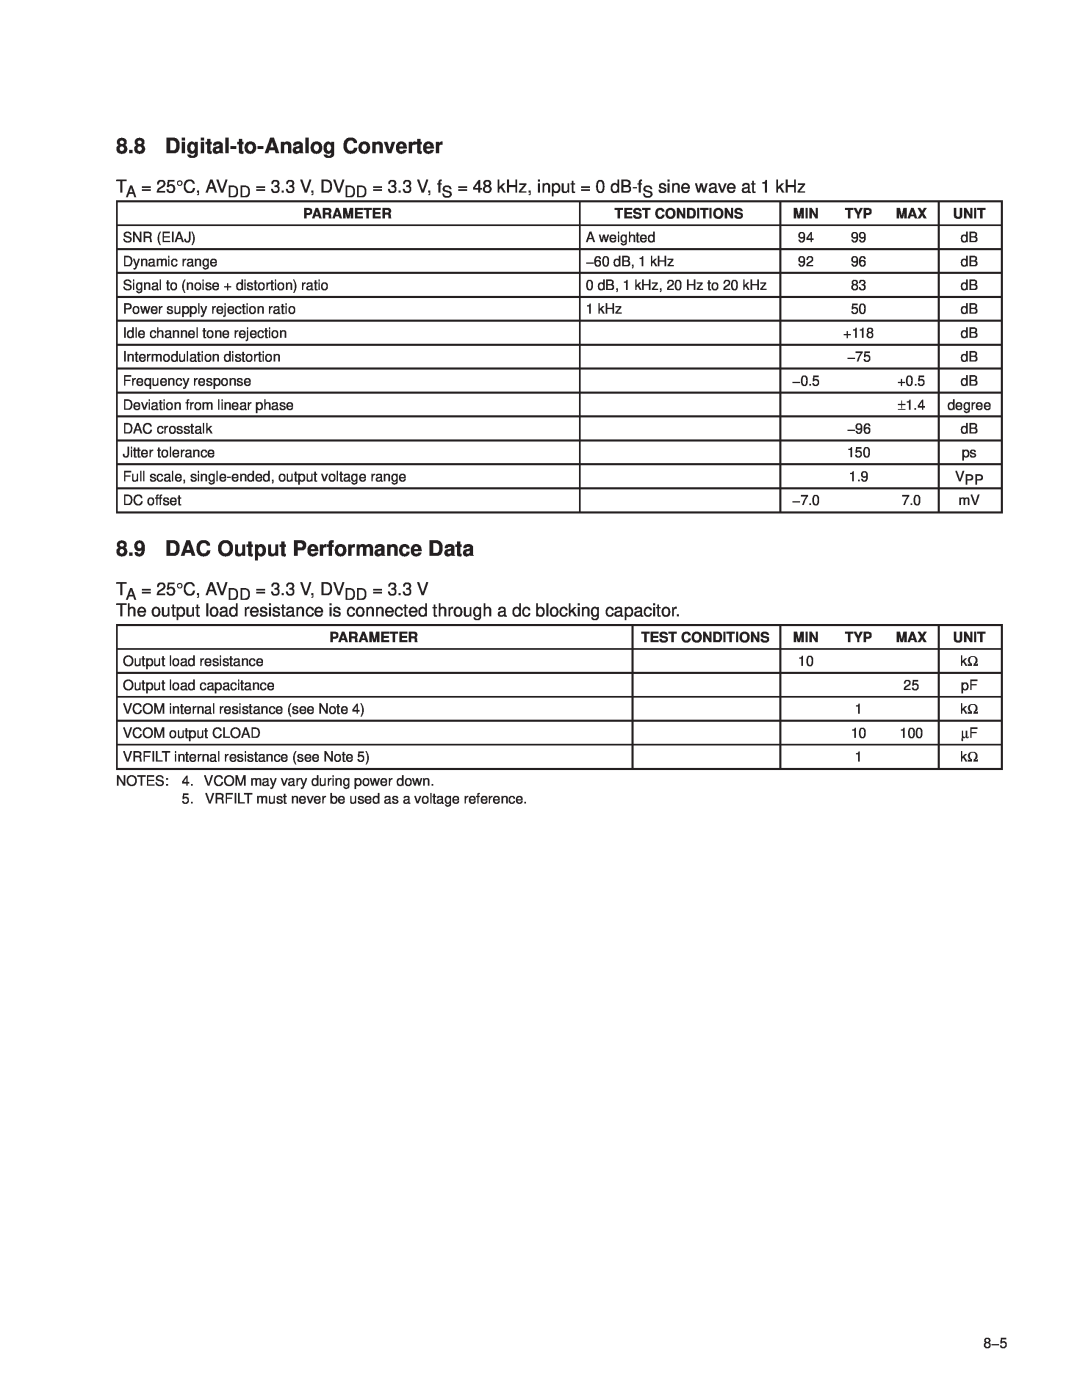 Texas Instruments TAS3002 manual Digital-to-AnalogConverter, DAC Output Performance Data 